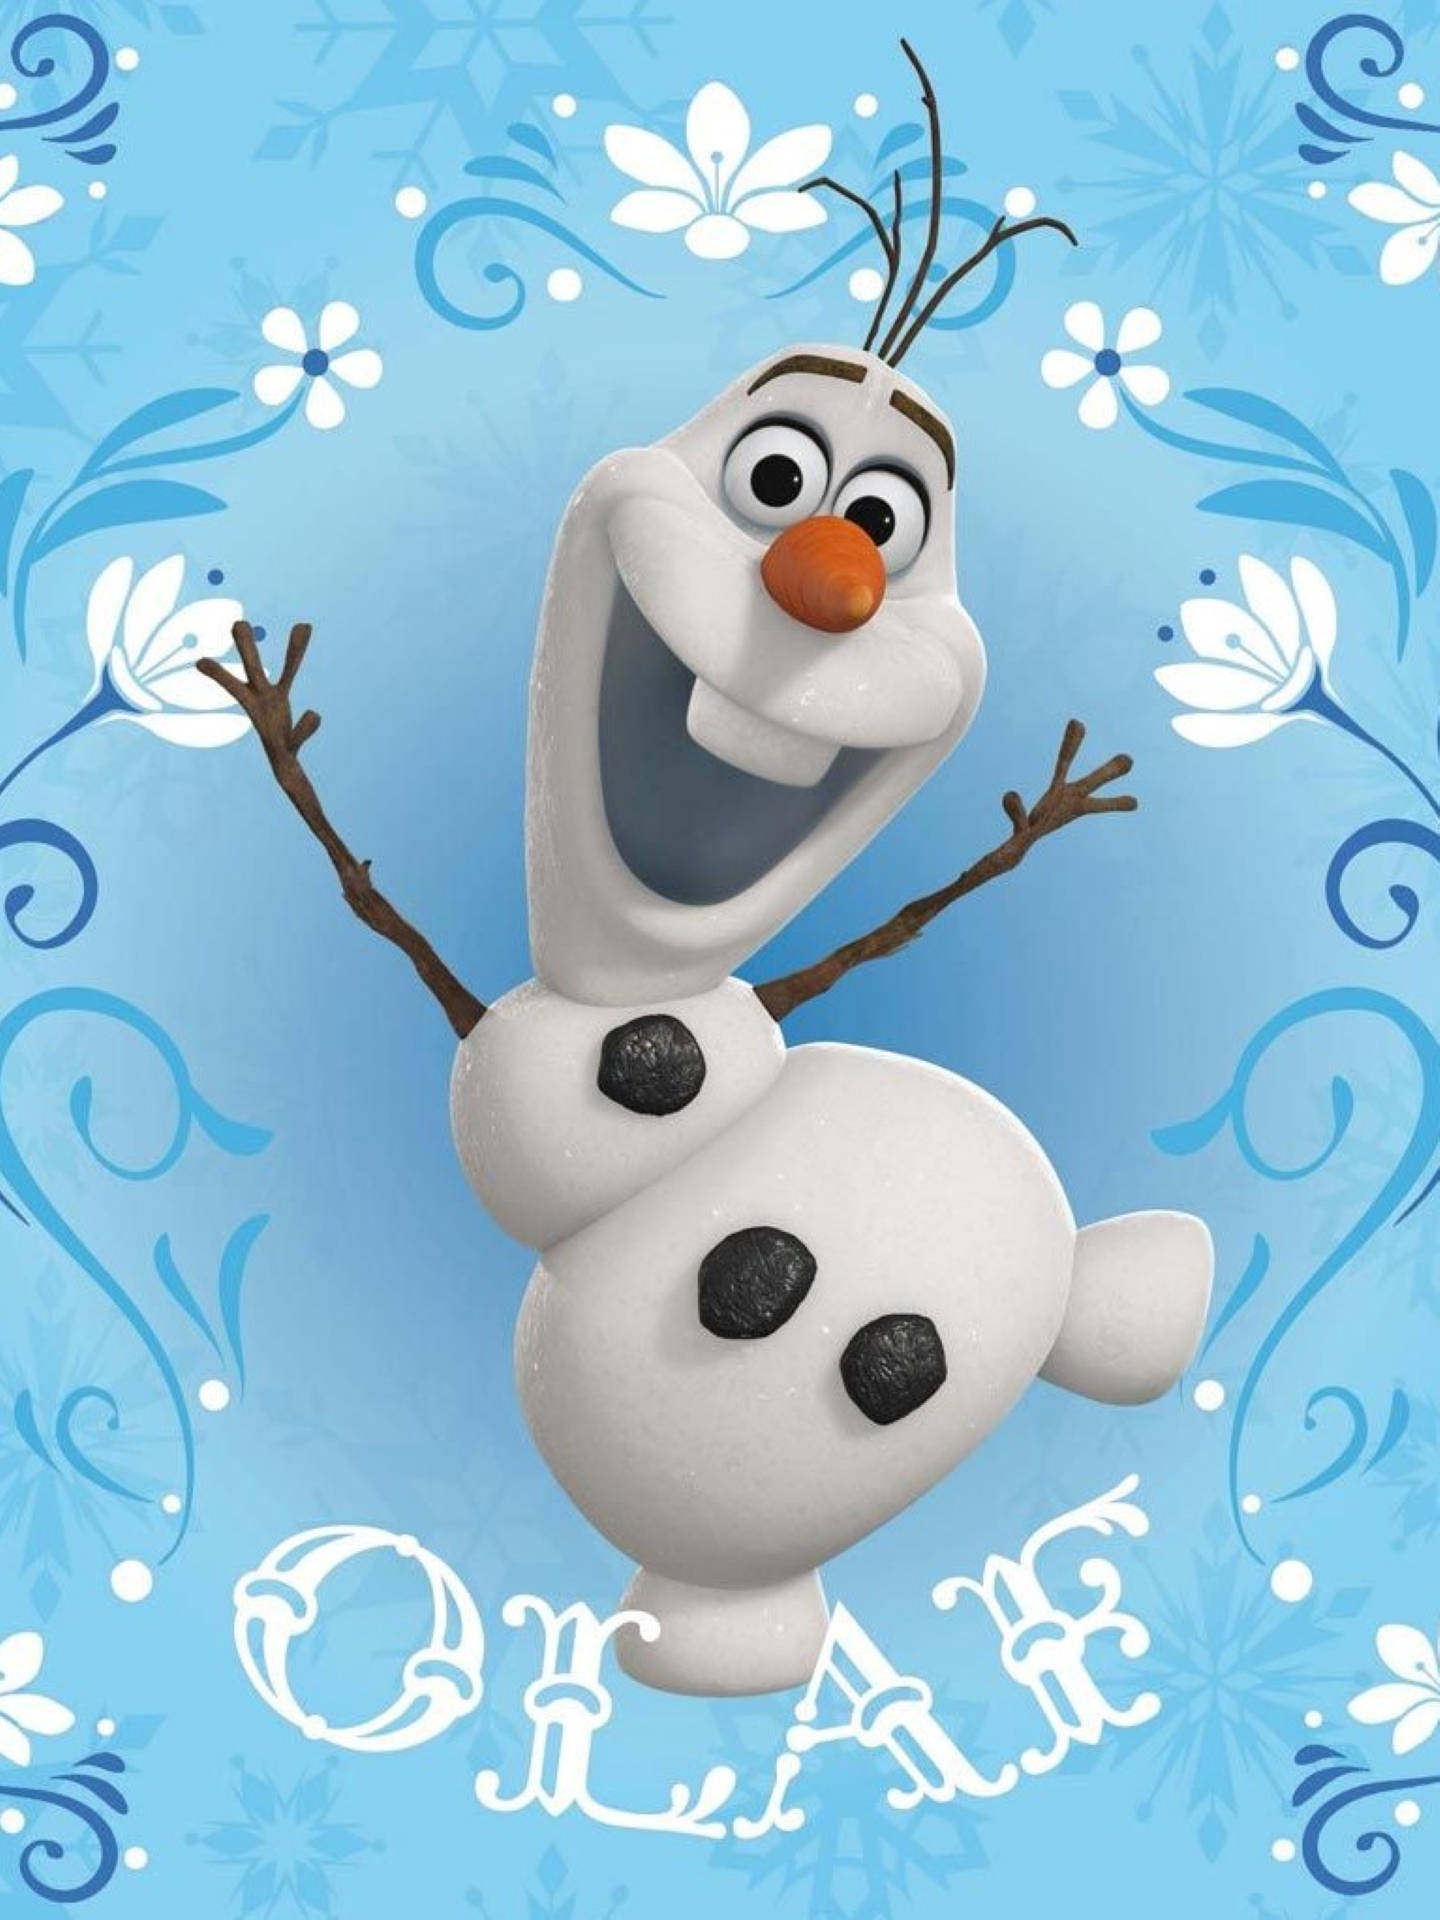 Olaf The Friendly Snowman Background